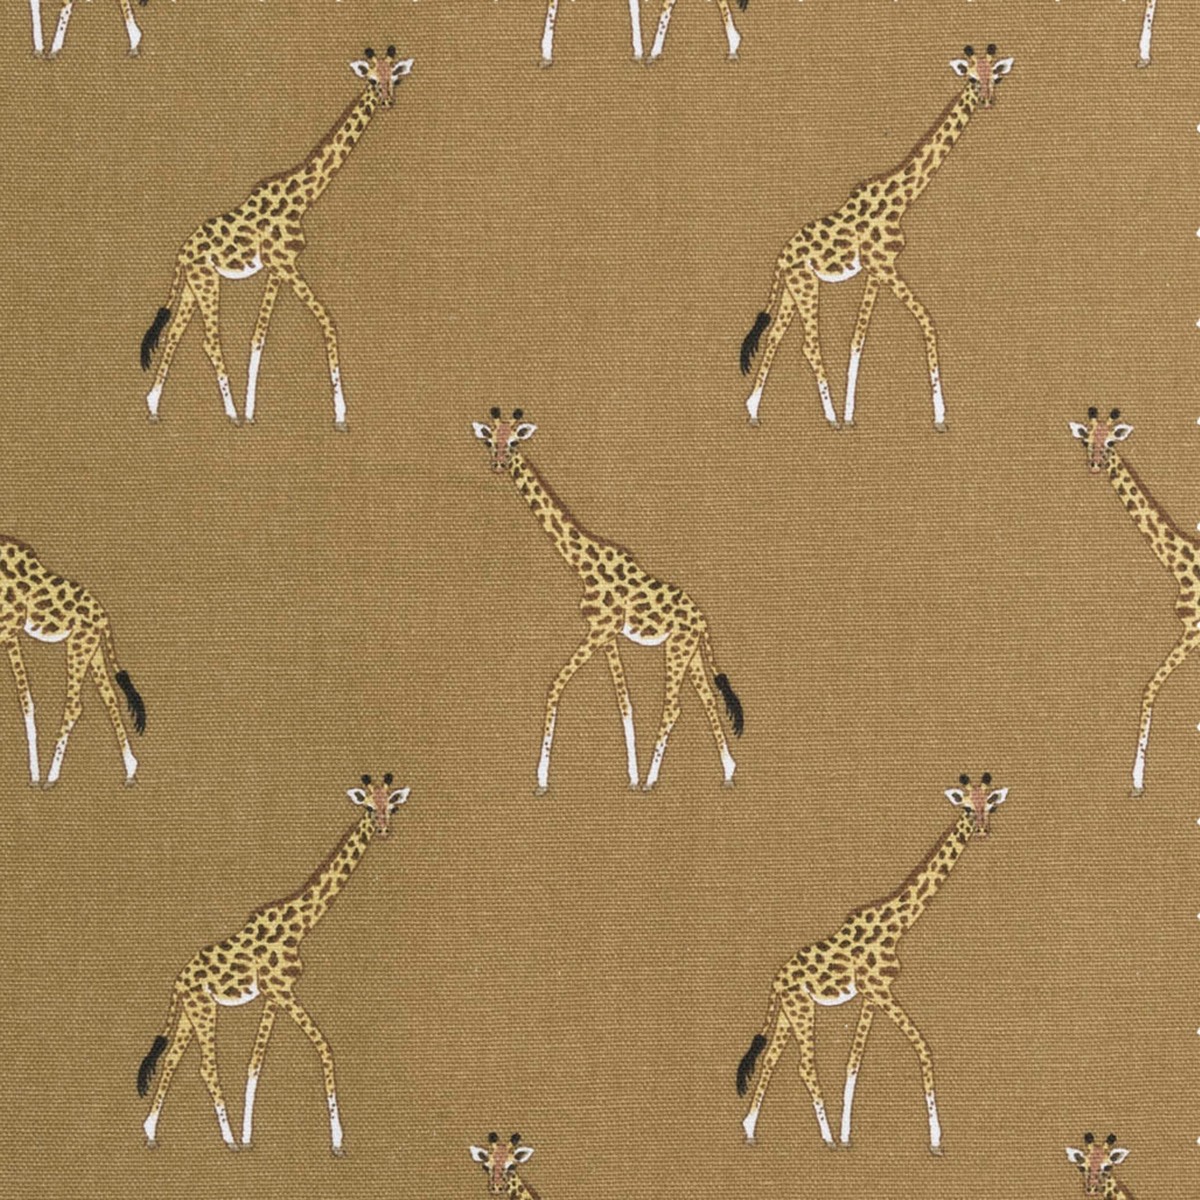 Giraffe Fabric by Sophie Allport